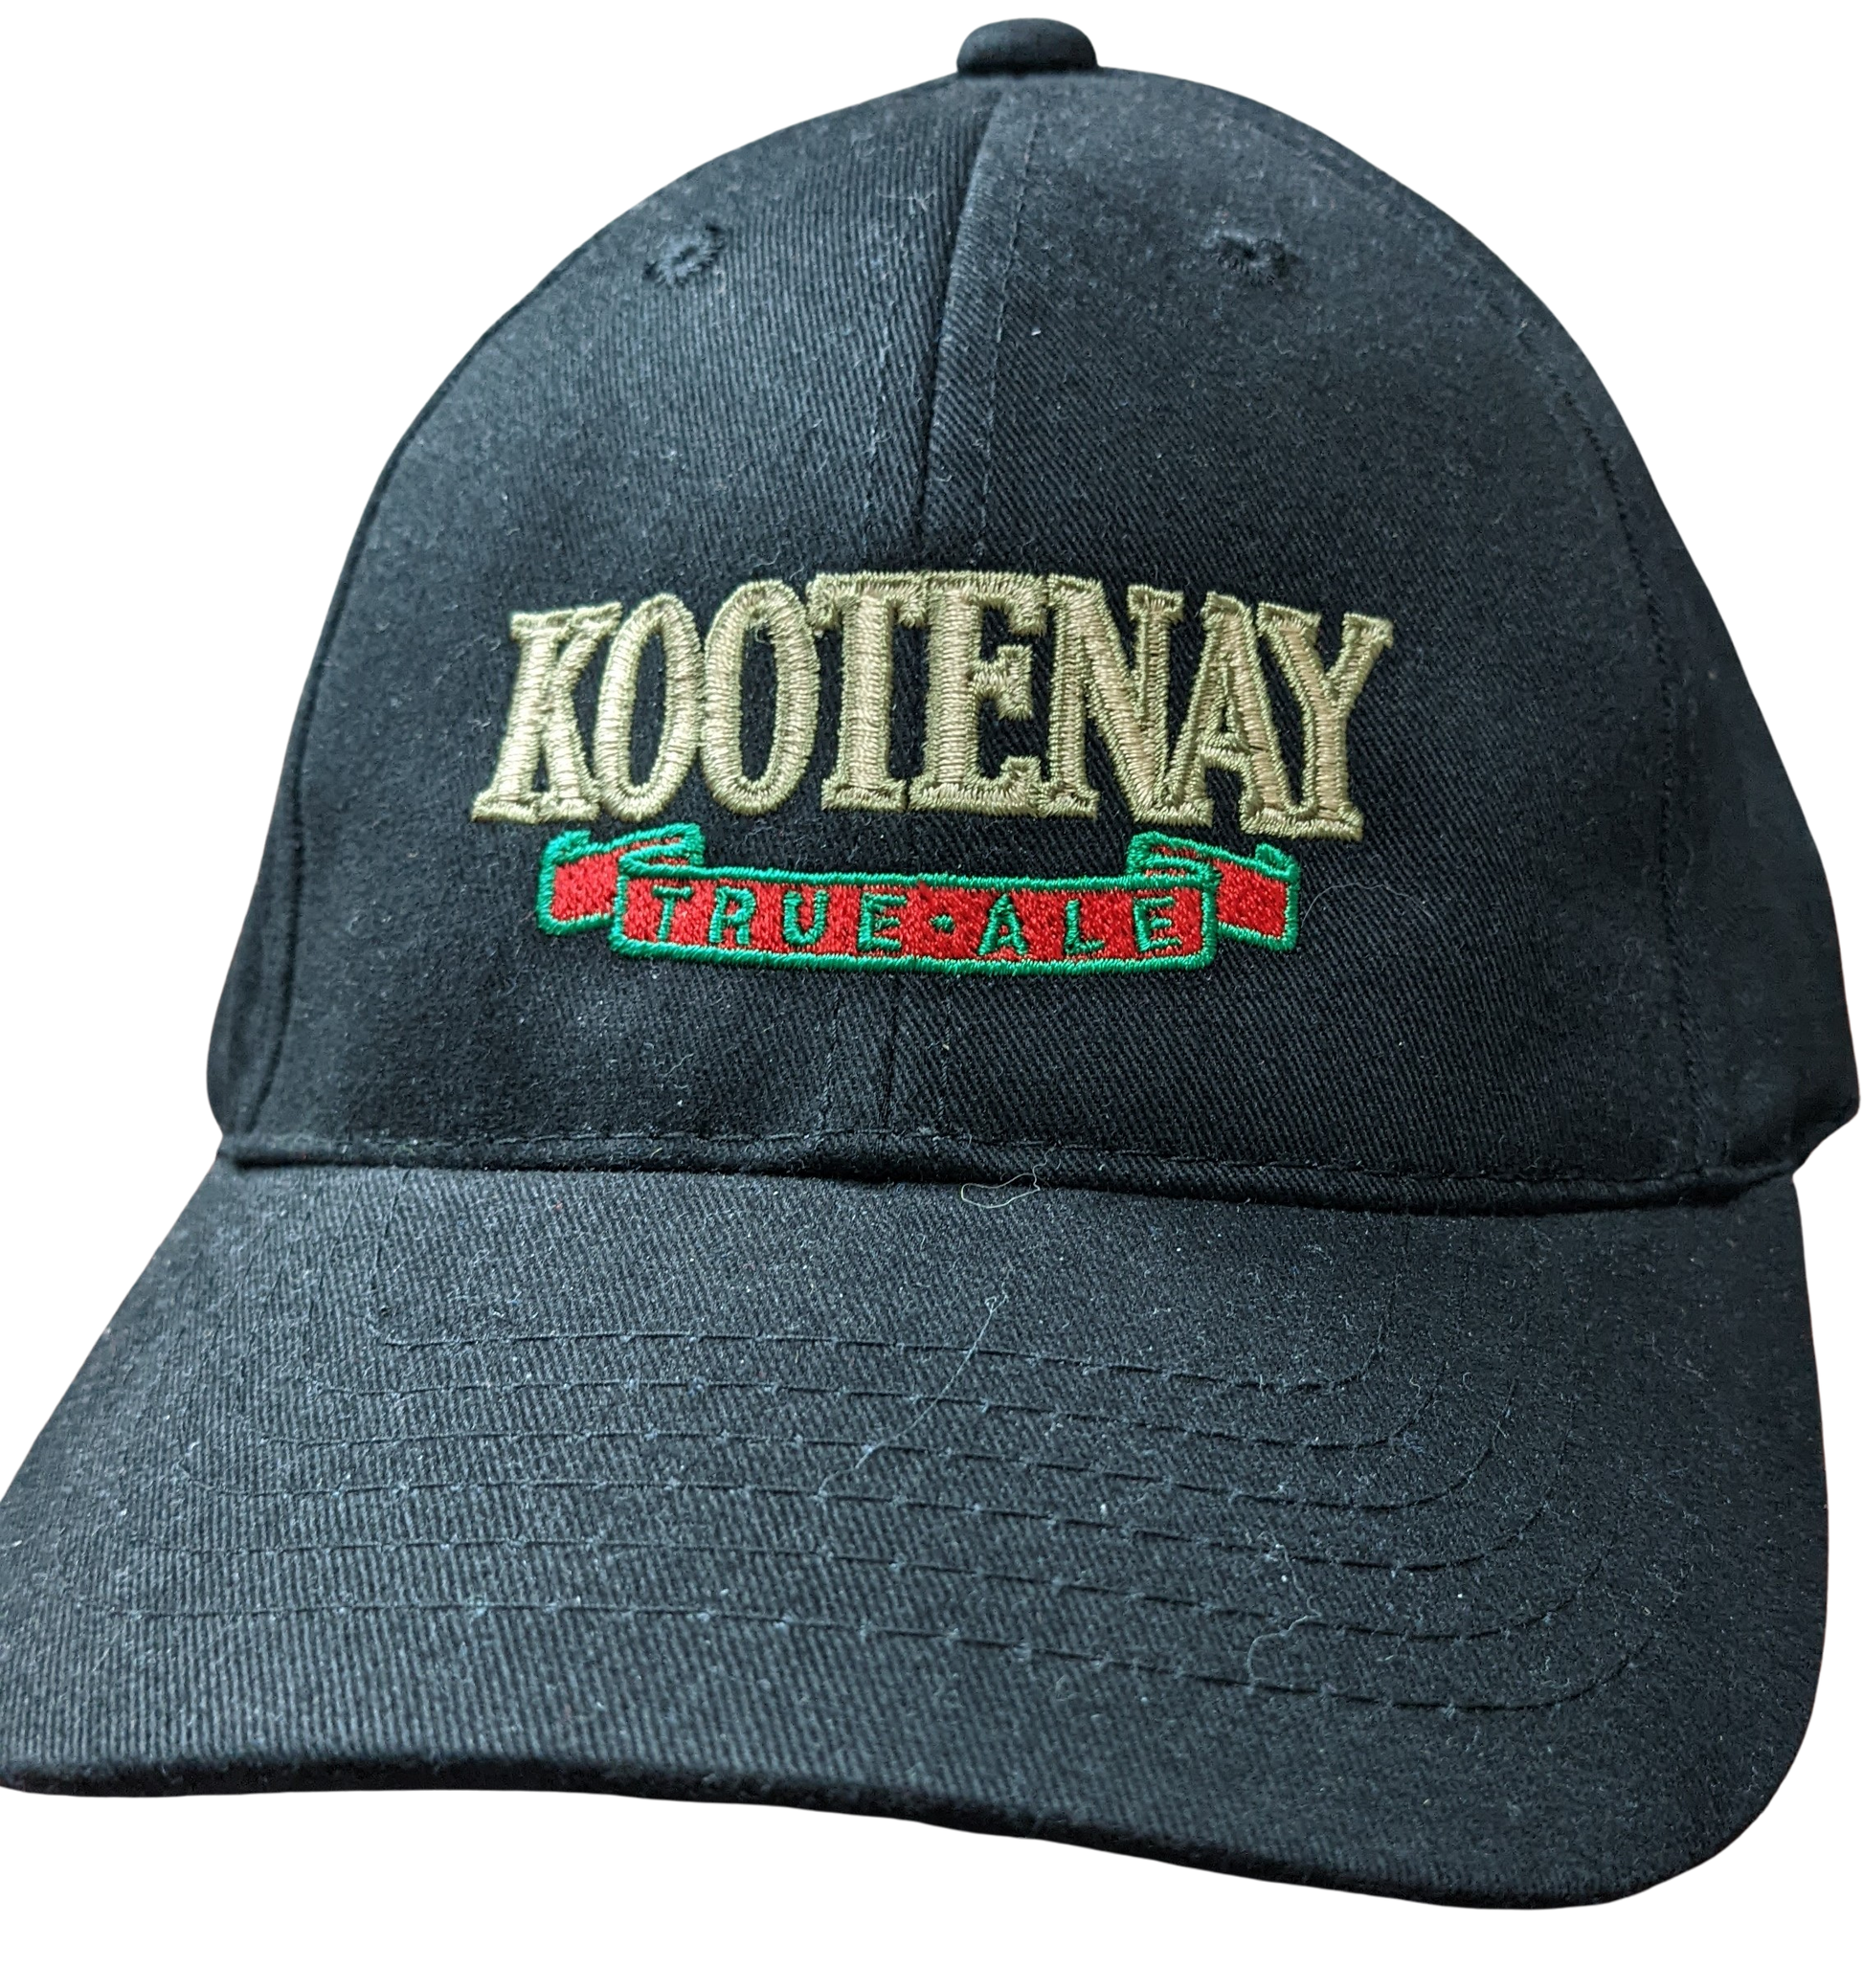 Kootenay True Ale Hat | Columbia Brewery | Kokanee Beer Gear Store | Creston BC